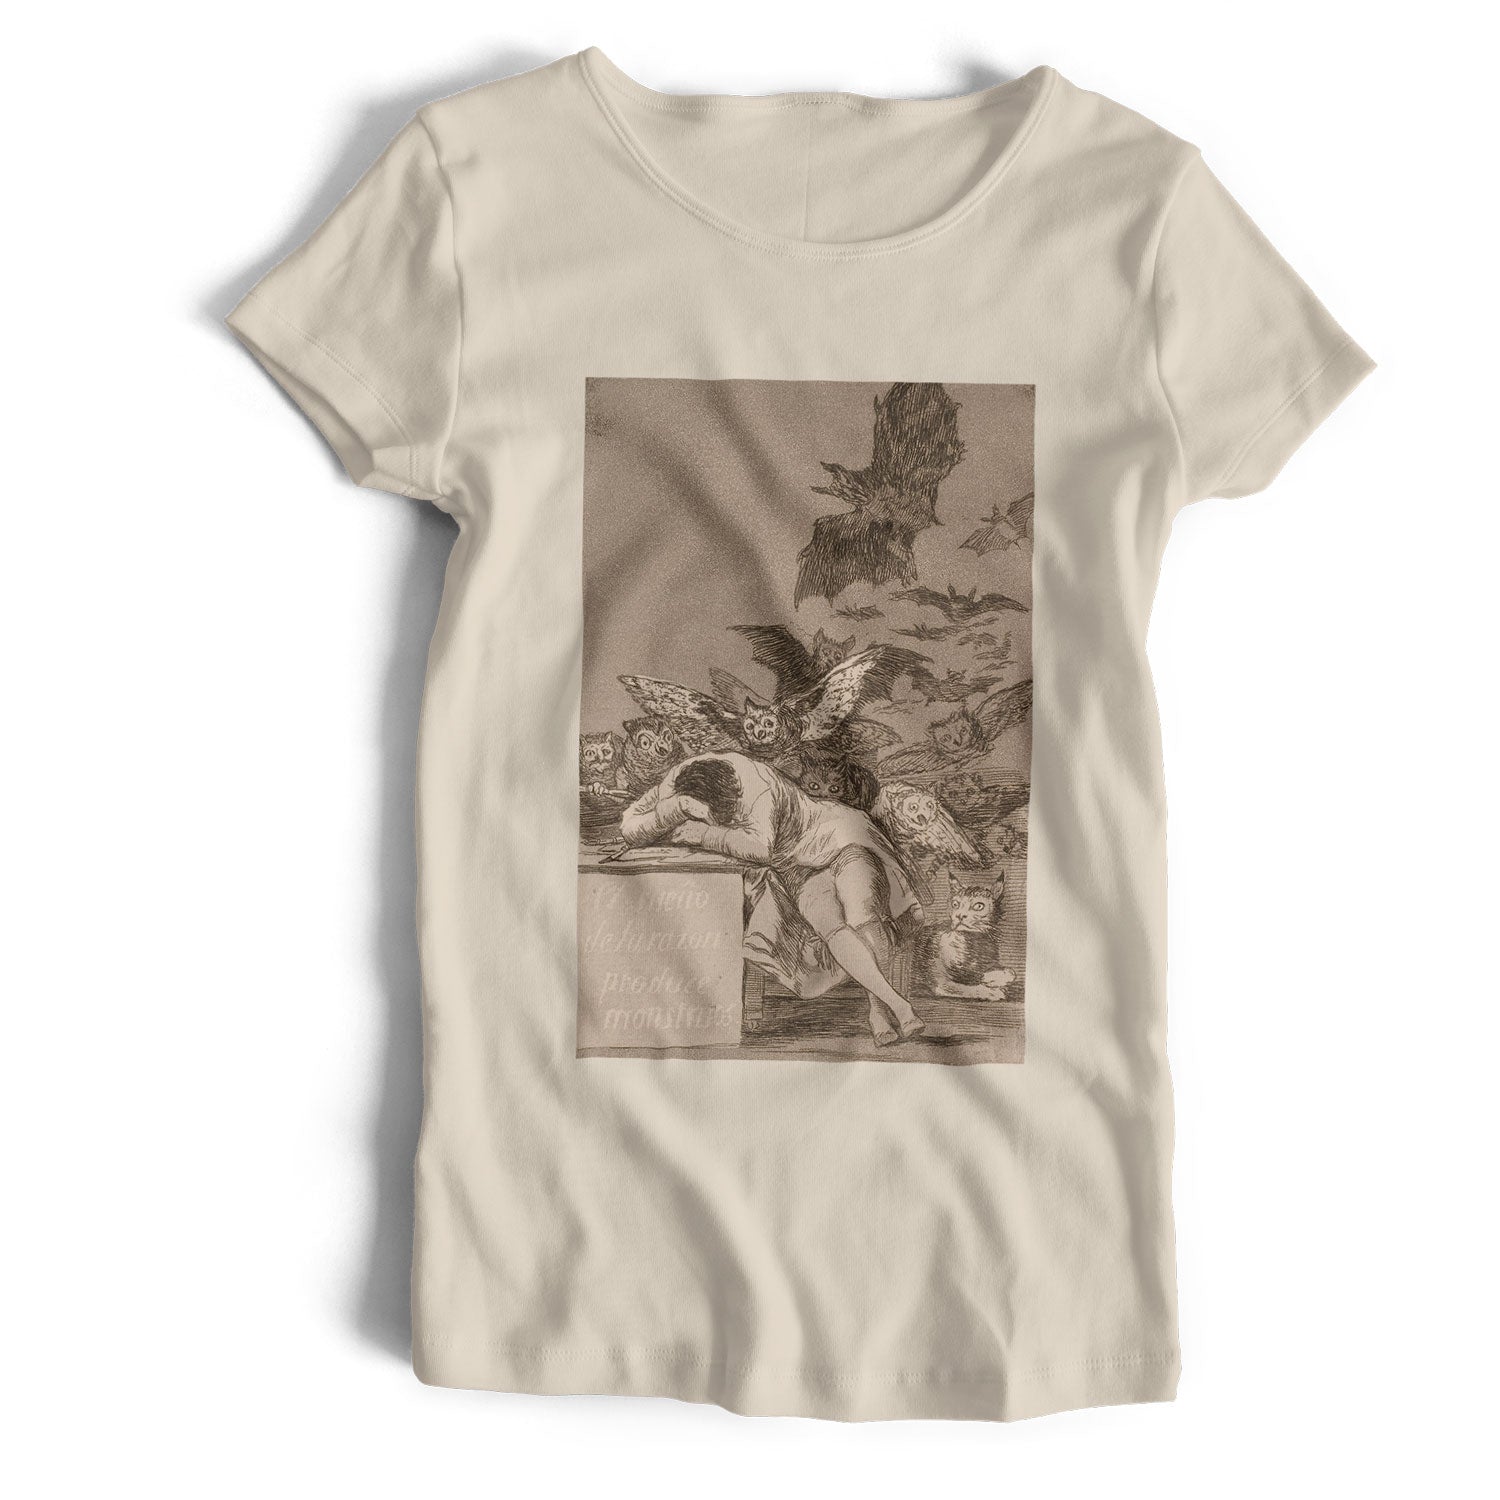 Goya T Shirt - The Sleep Of Reason Produces Monsters An Old Skool Hooligans Fine Art Tee